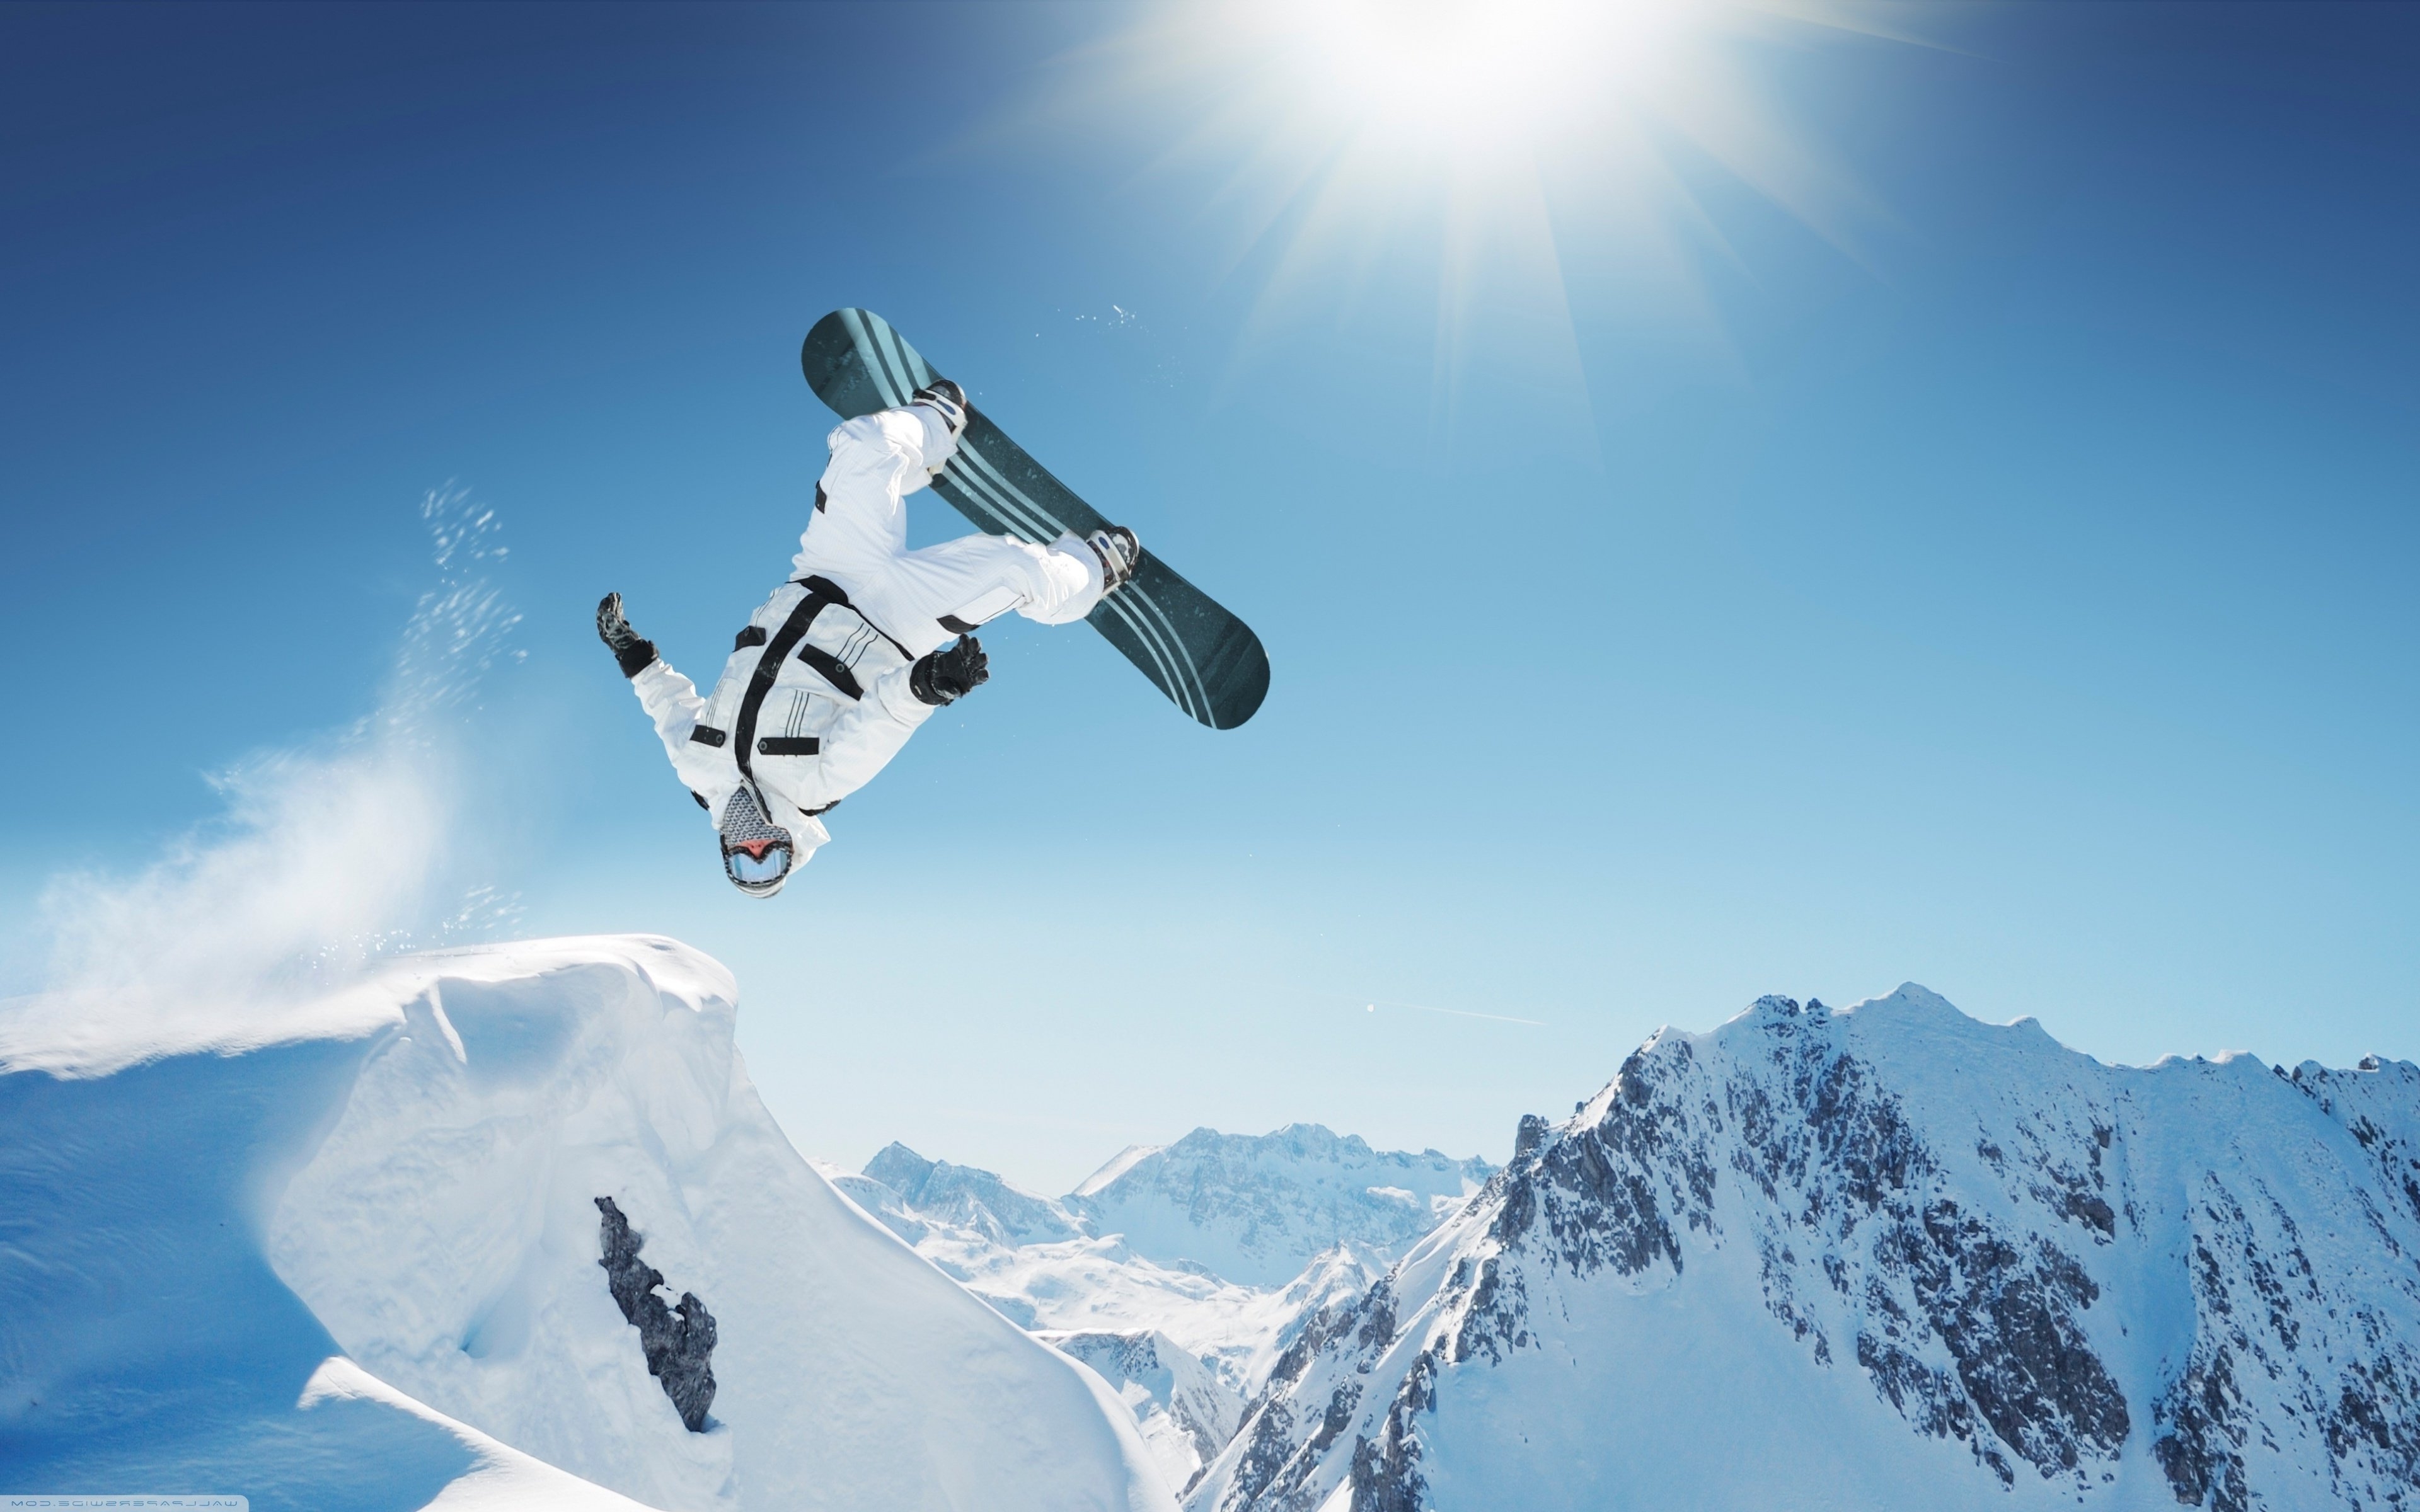  46 Extreme  Skiing Wallpaper  on WallpaperSafari